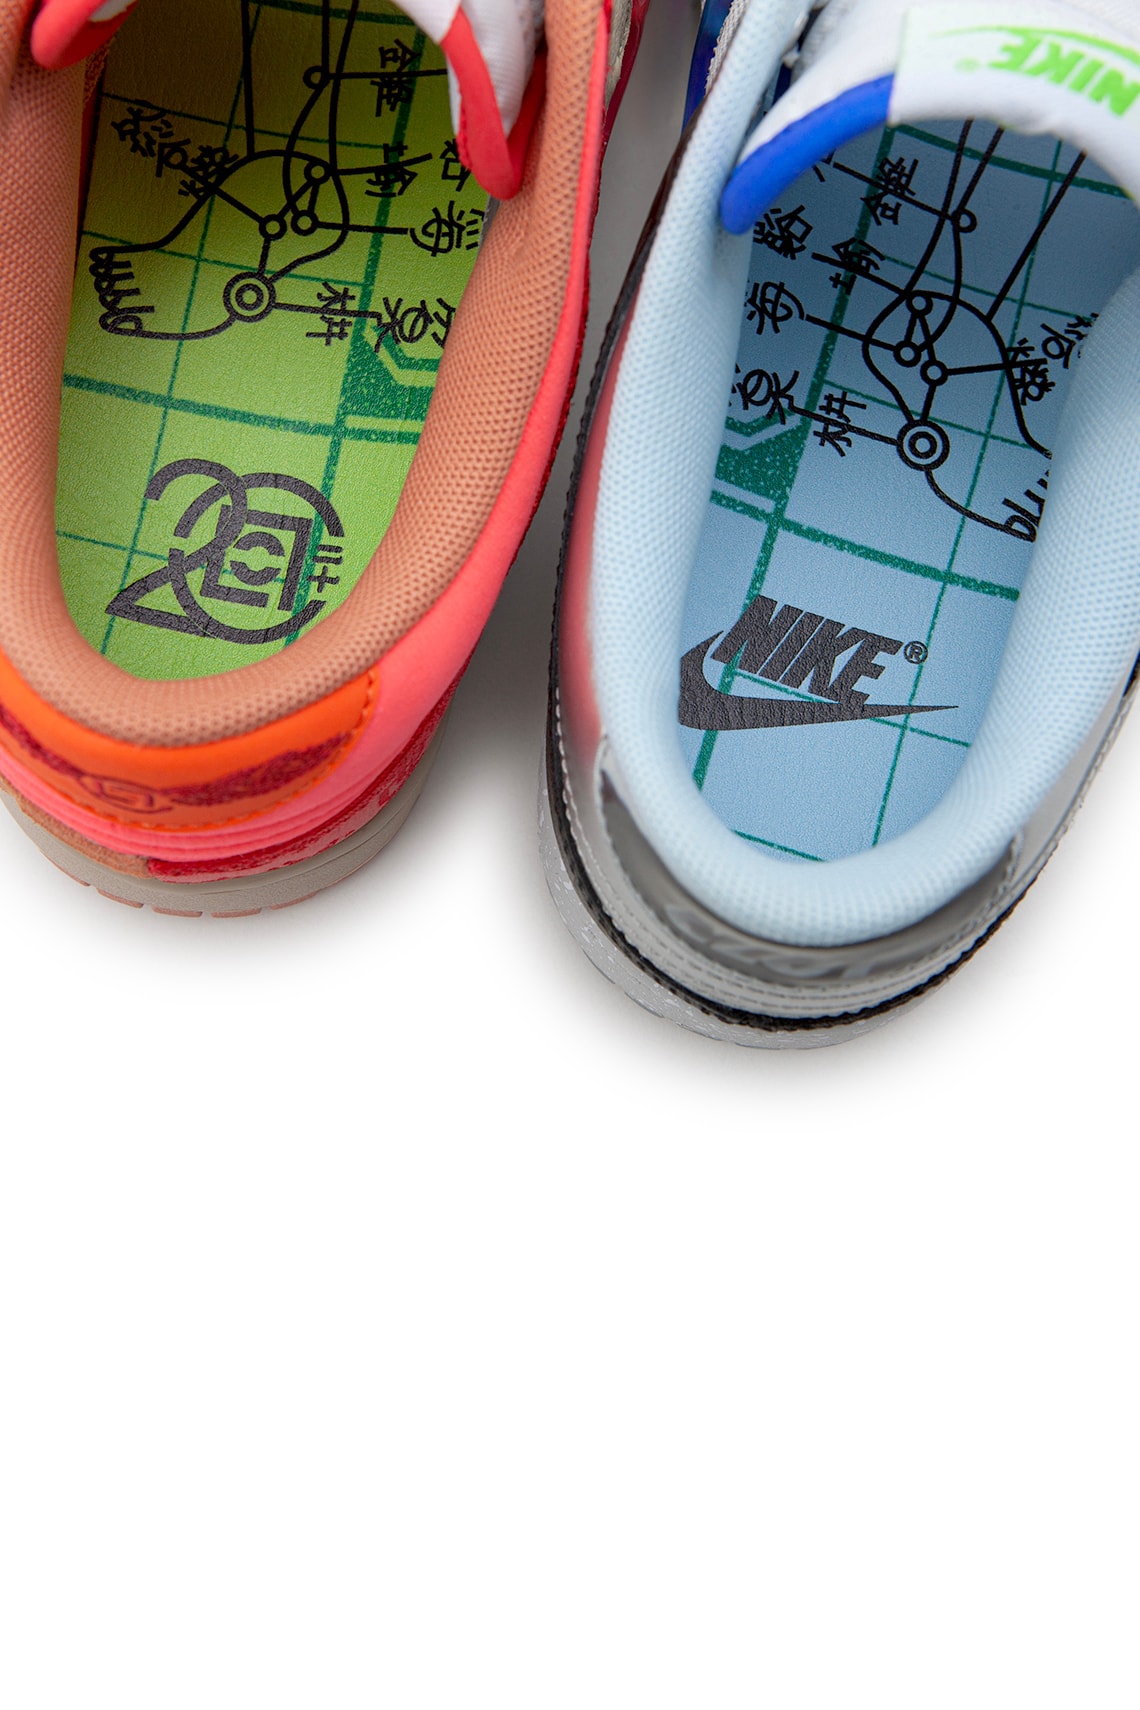 CLOT 携手 Nike 推出全新「WHAT THE? CLOT」DUNK 联名鞋款